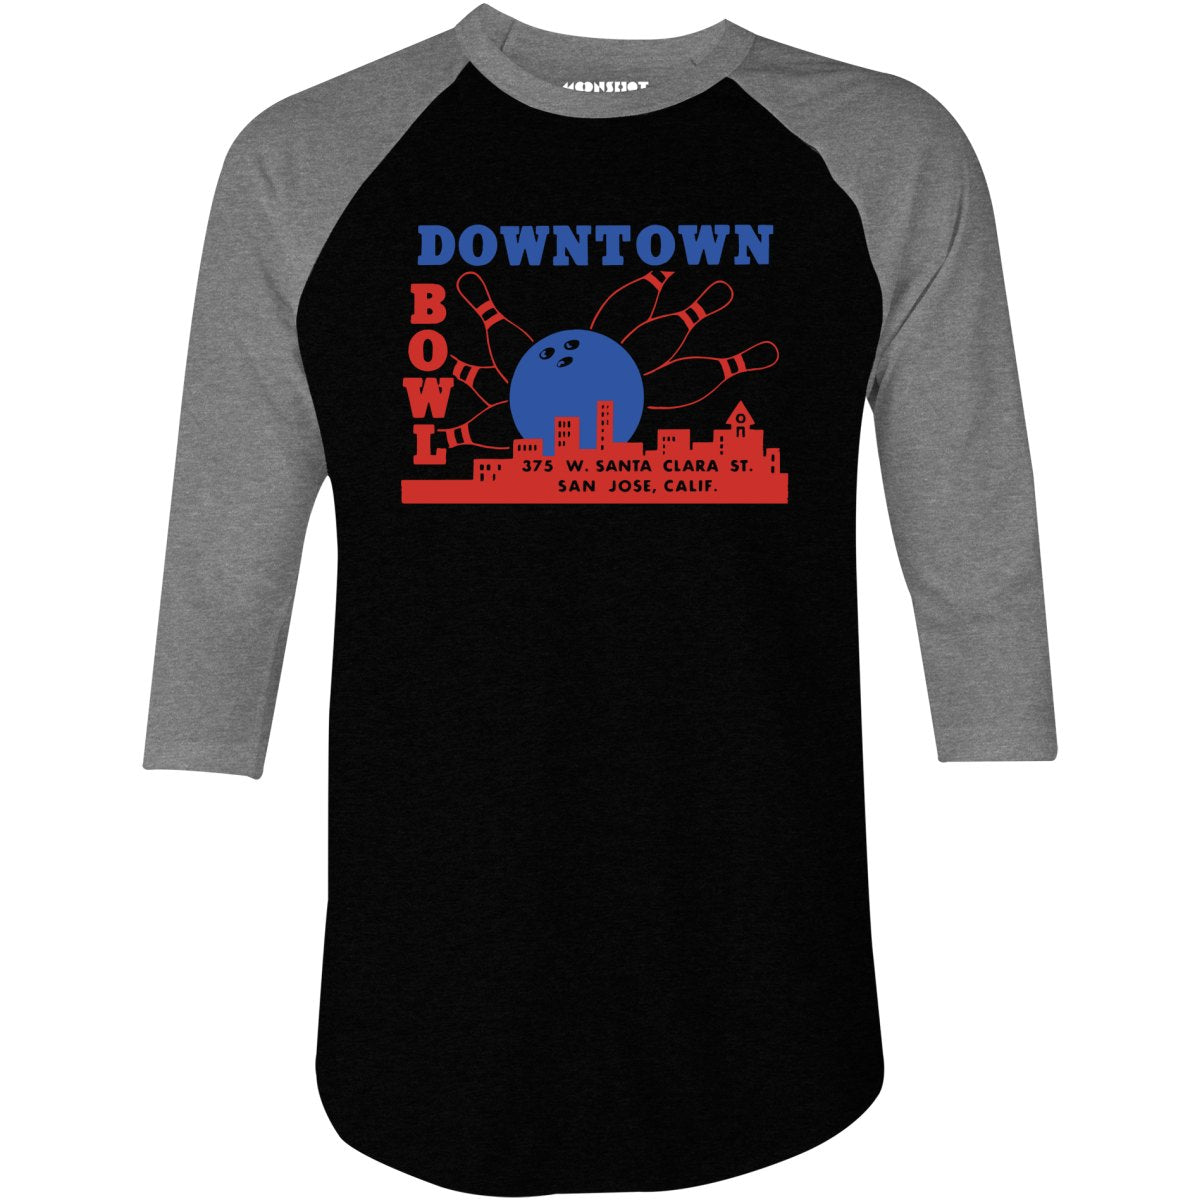 Downtown Bowl - San Jose, CA - Vintage Bowling Alley - 3/4 Sleeve Raglan T-Shirt